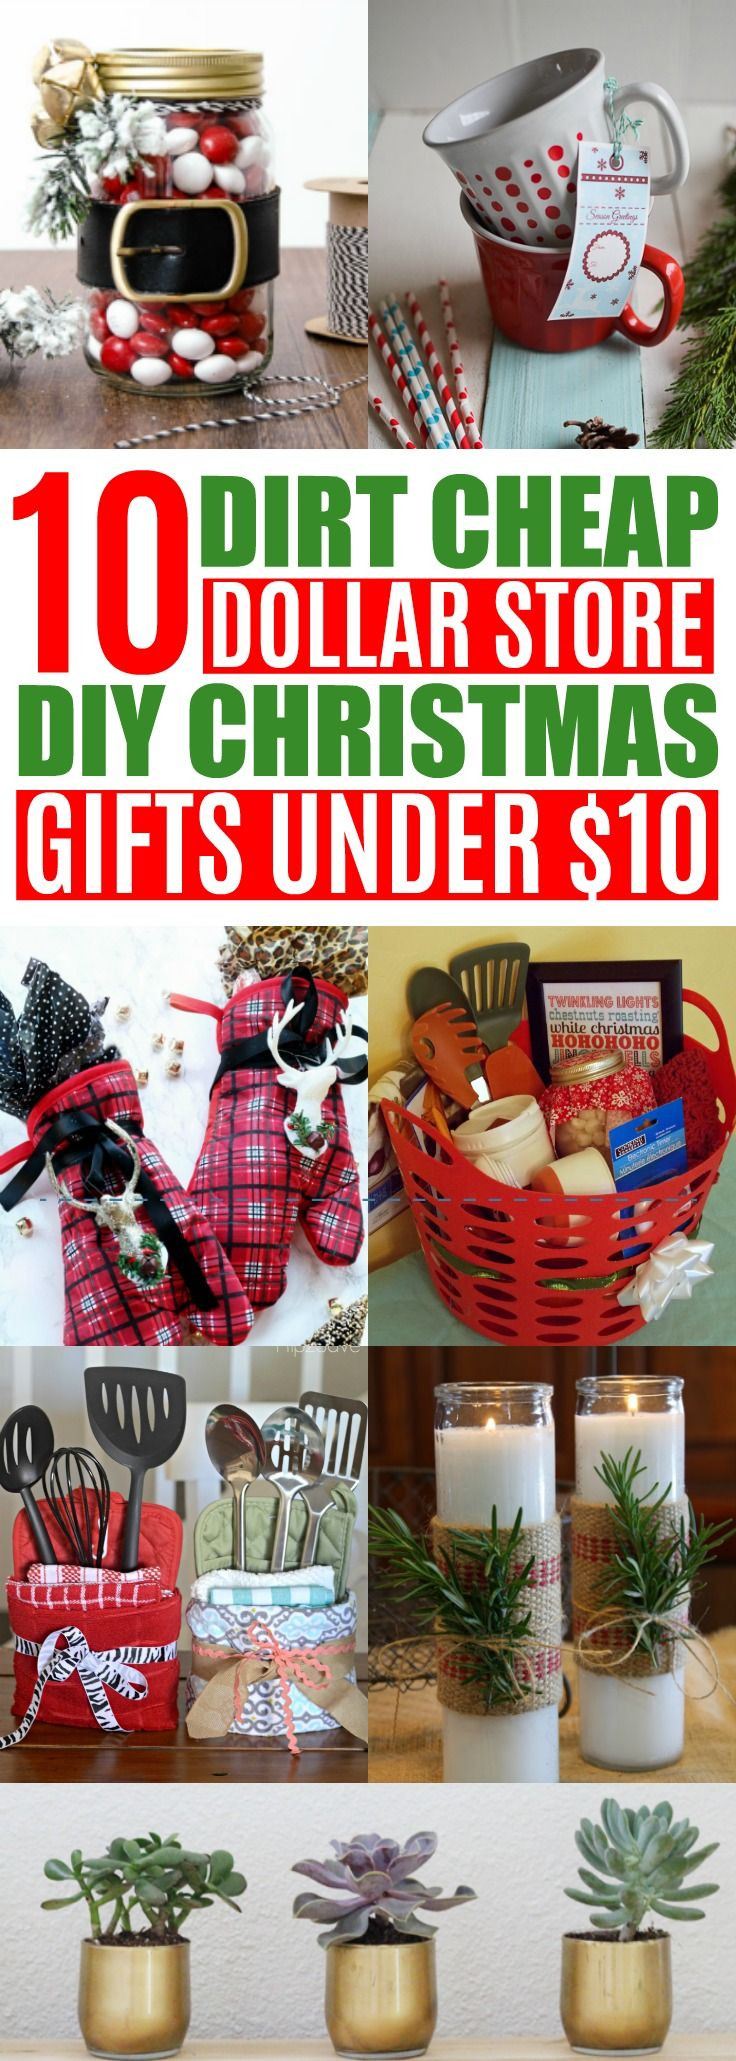 Cheap Christmas Gift Ideas For Family
 Best 25 Friends family ideas on Pinterest